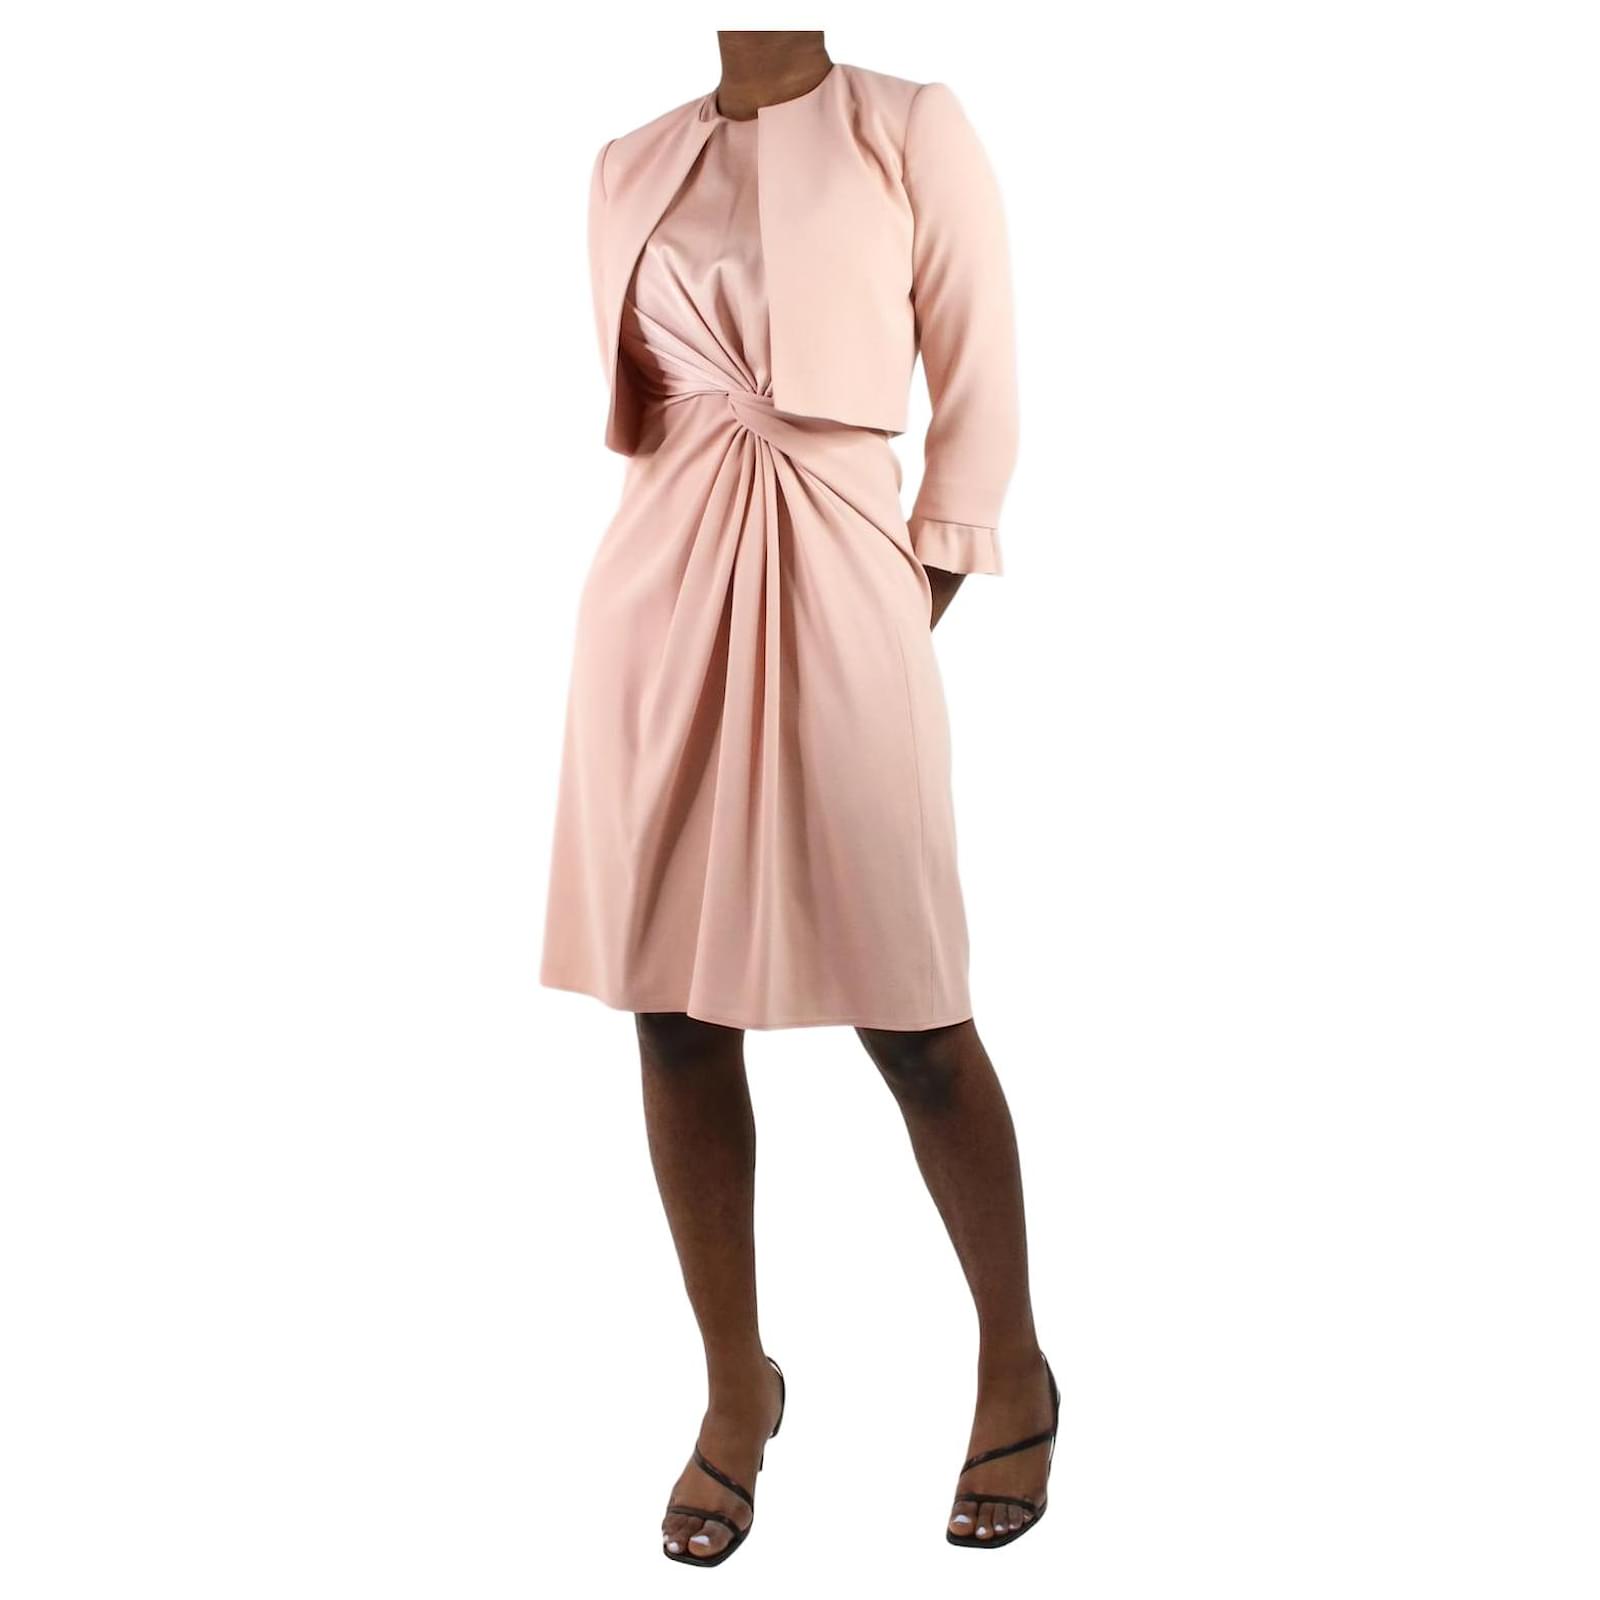 Paule Ka Pink sleeveless knot dress and jacket set - size FR 36/38